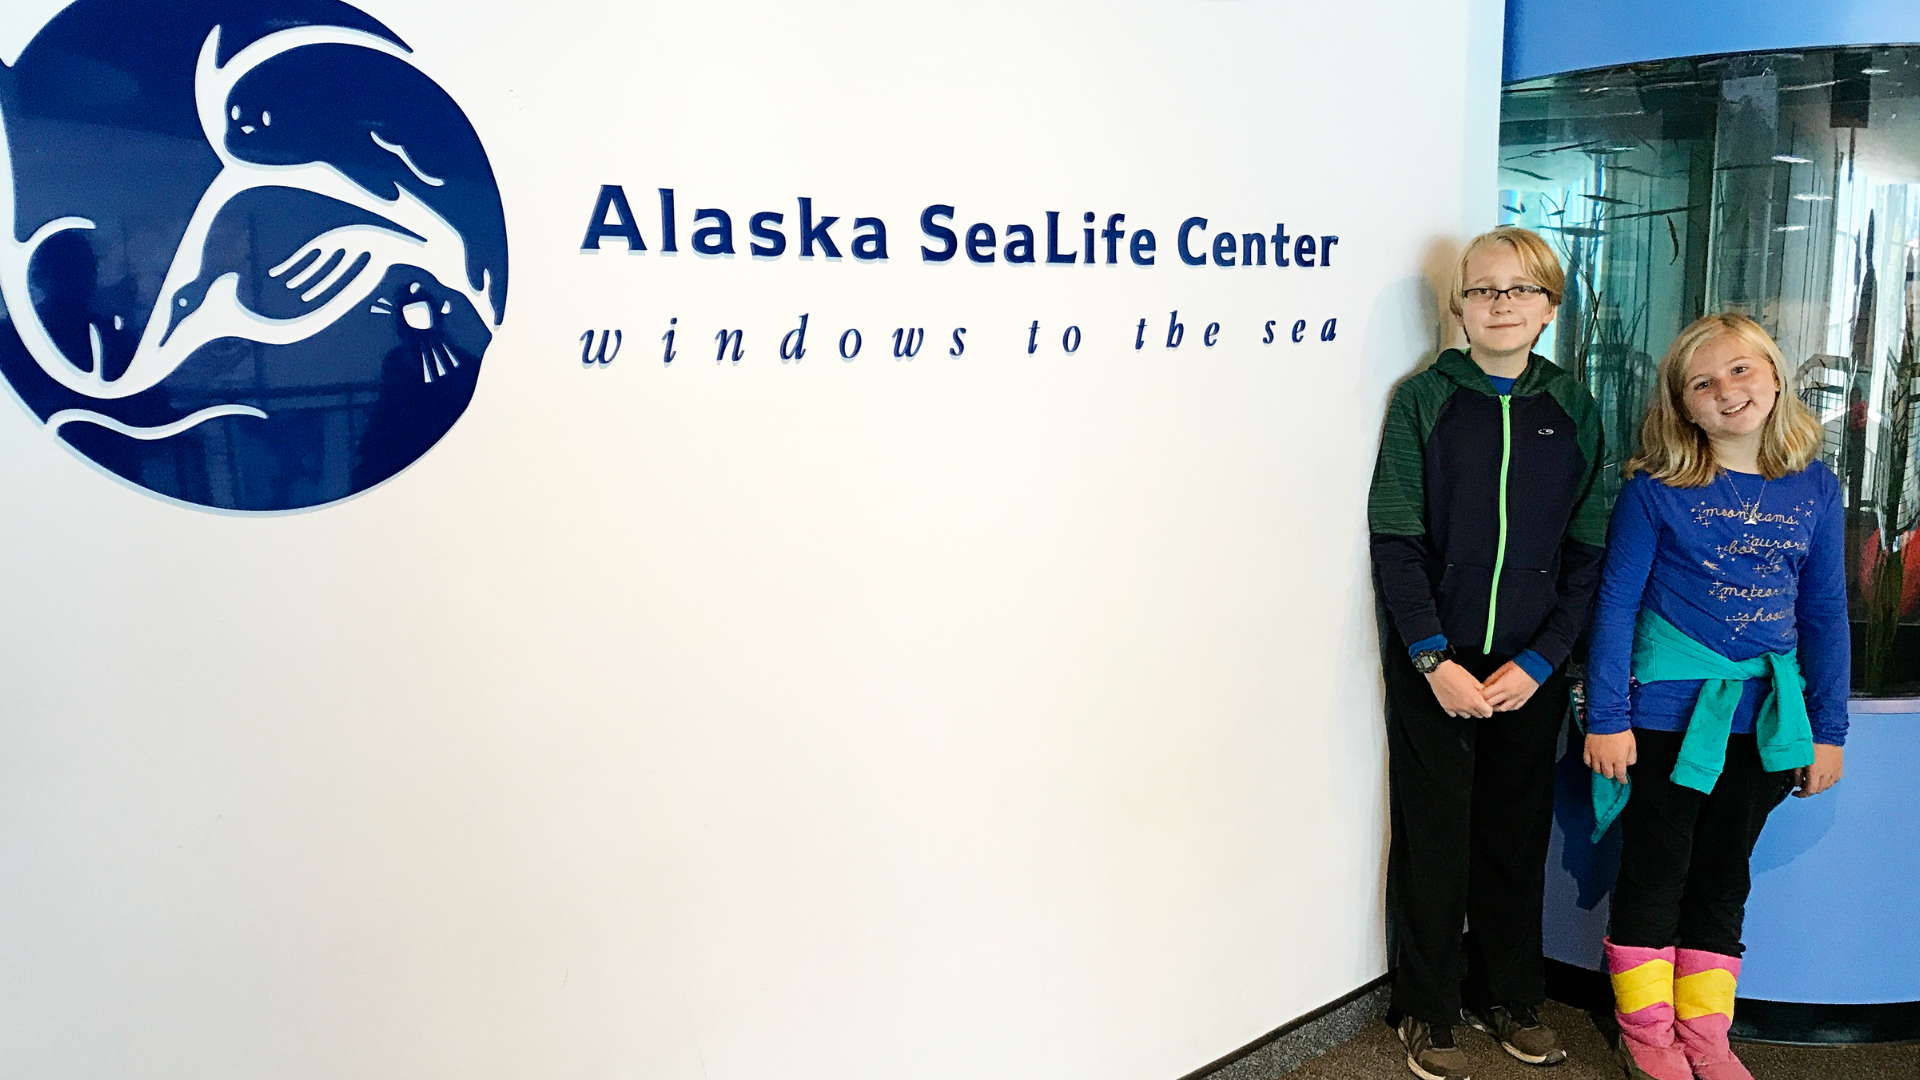 Alaska SeaLife Center in Seward, Alaska - Perfect place for kids!